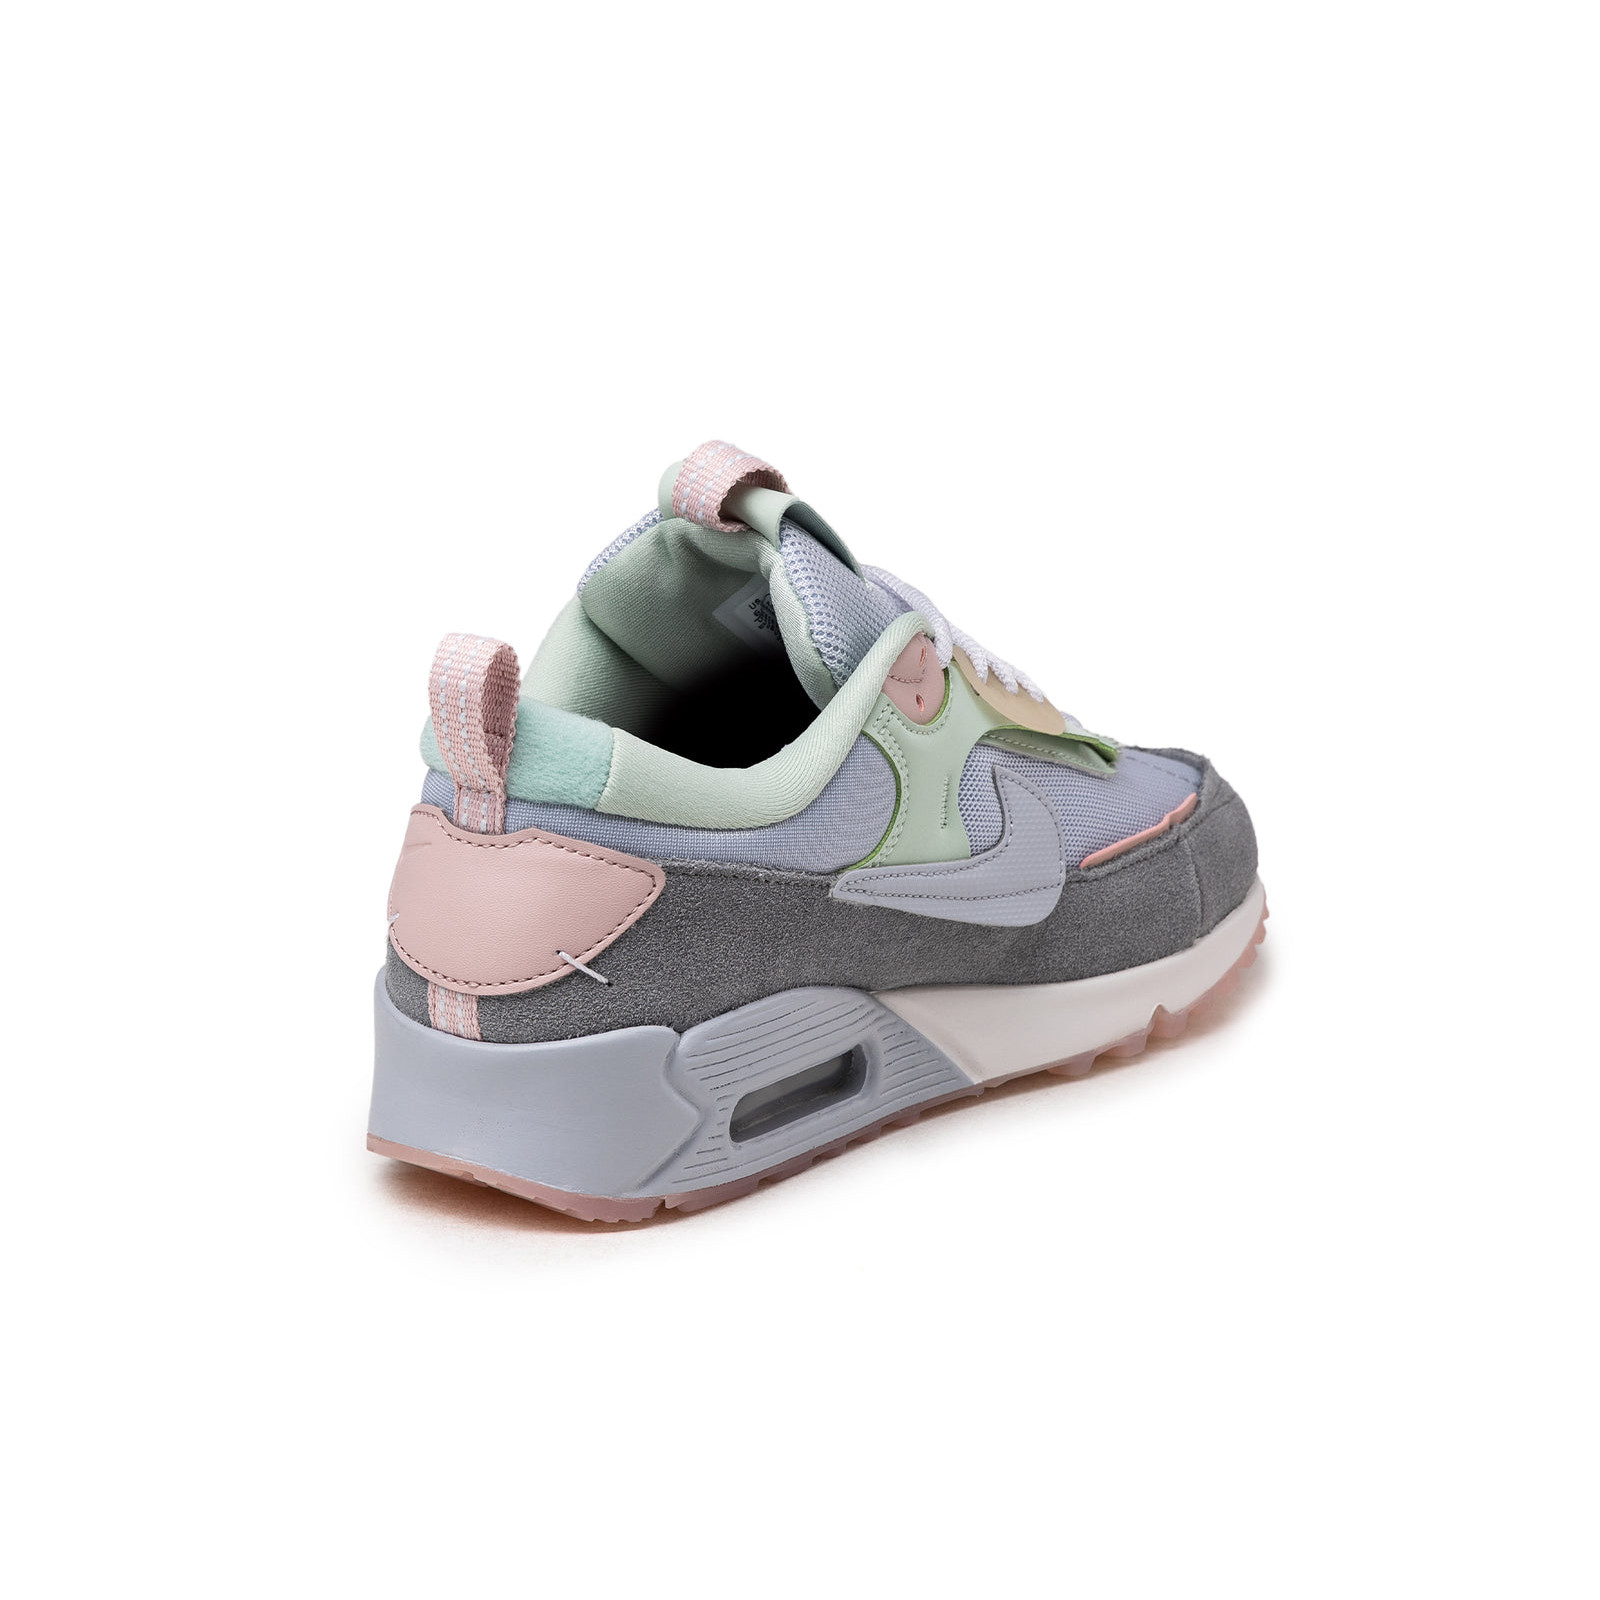 Nike Air Max 90 Futura
« Grey Pastel »